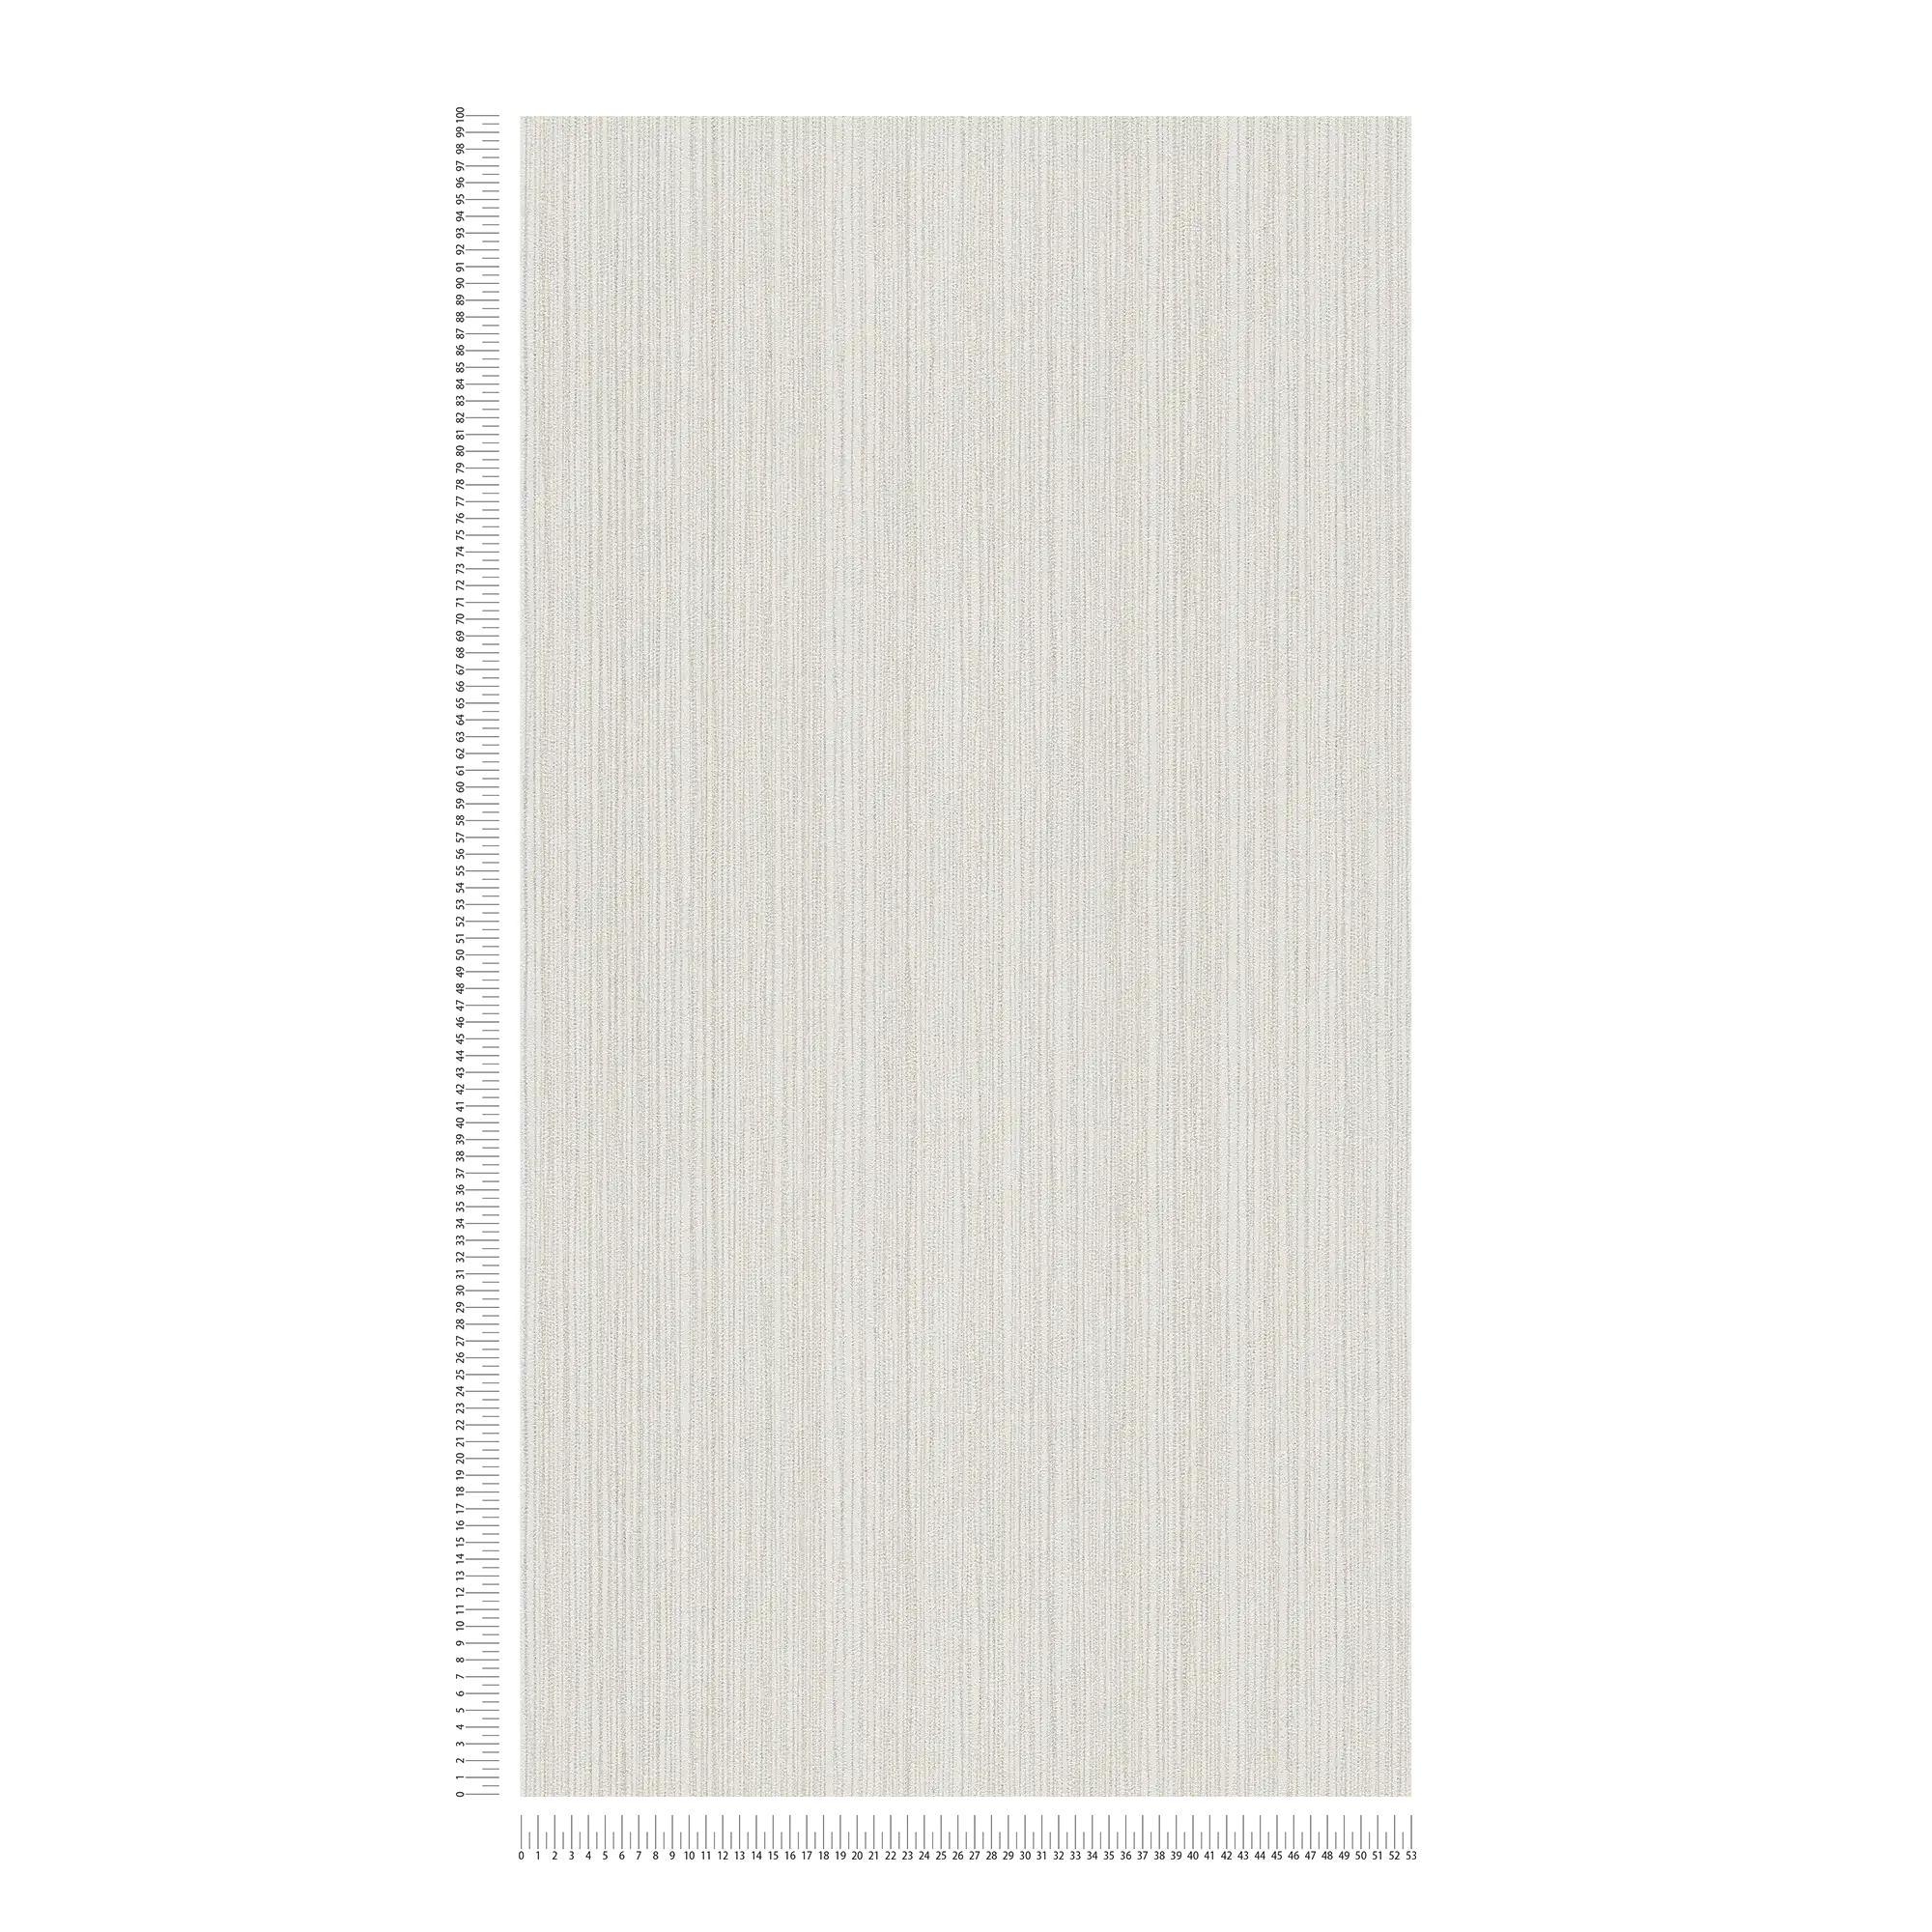             Light grey wallpaper with line pattern - metallic, grey
        